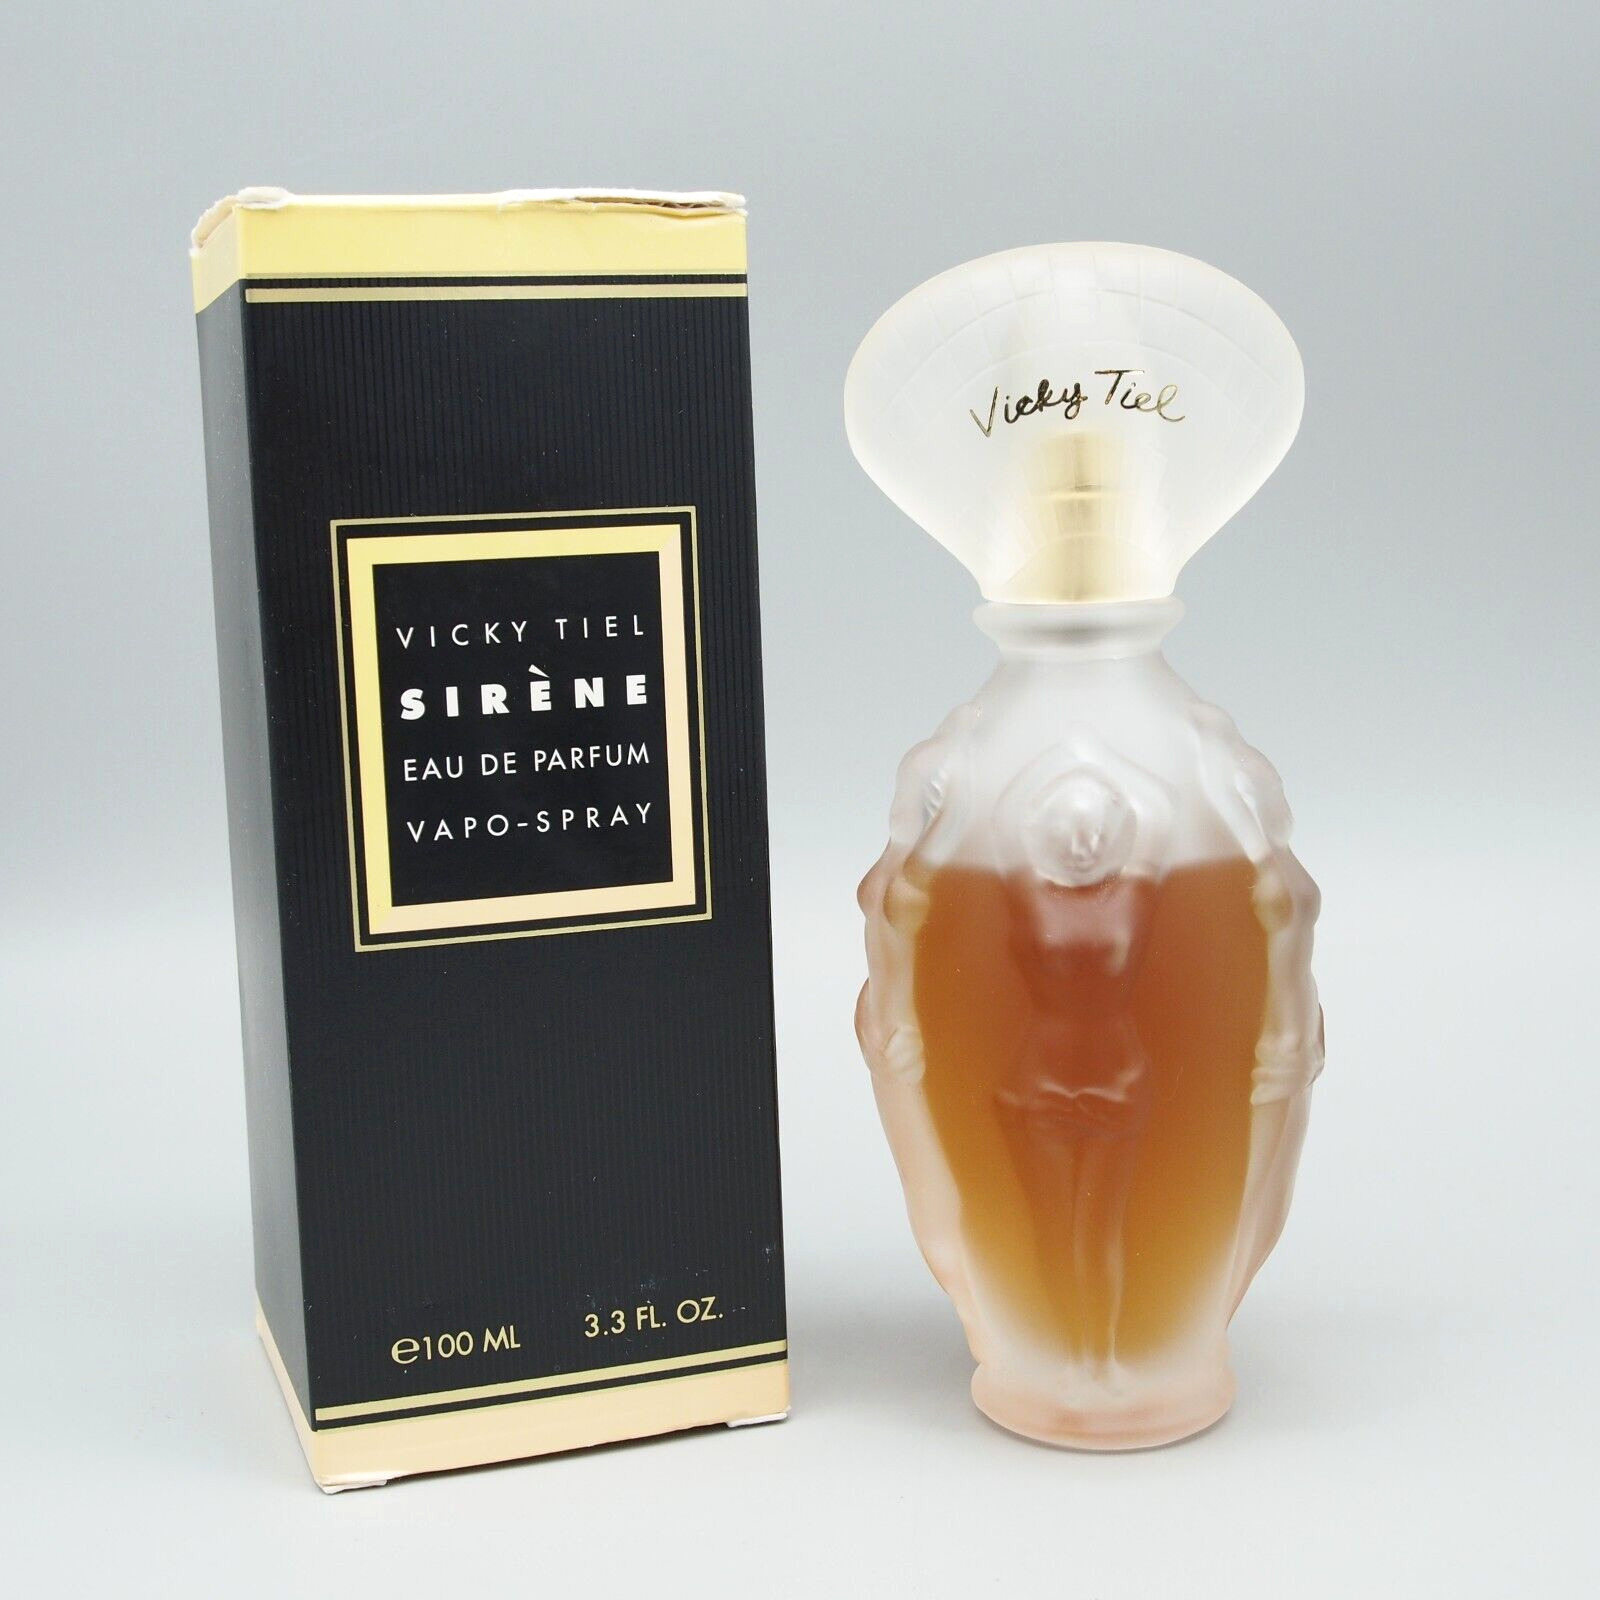 Vintage FIVE STAR VICKY TIEL SIRENE Spray Perfume 3.3oz Original Scent 80%+ Full